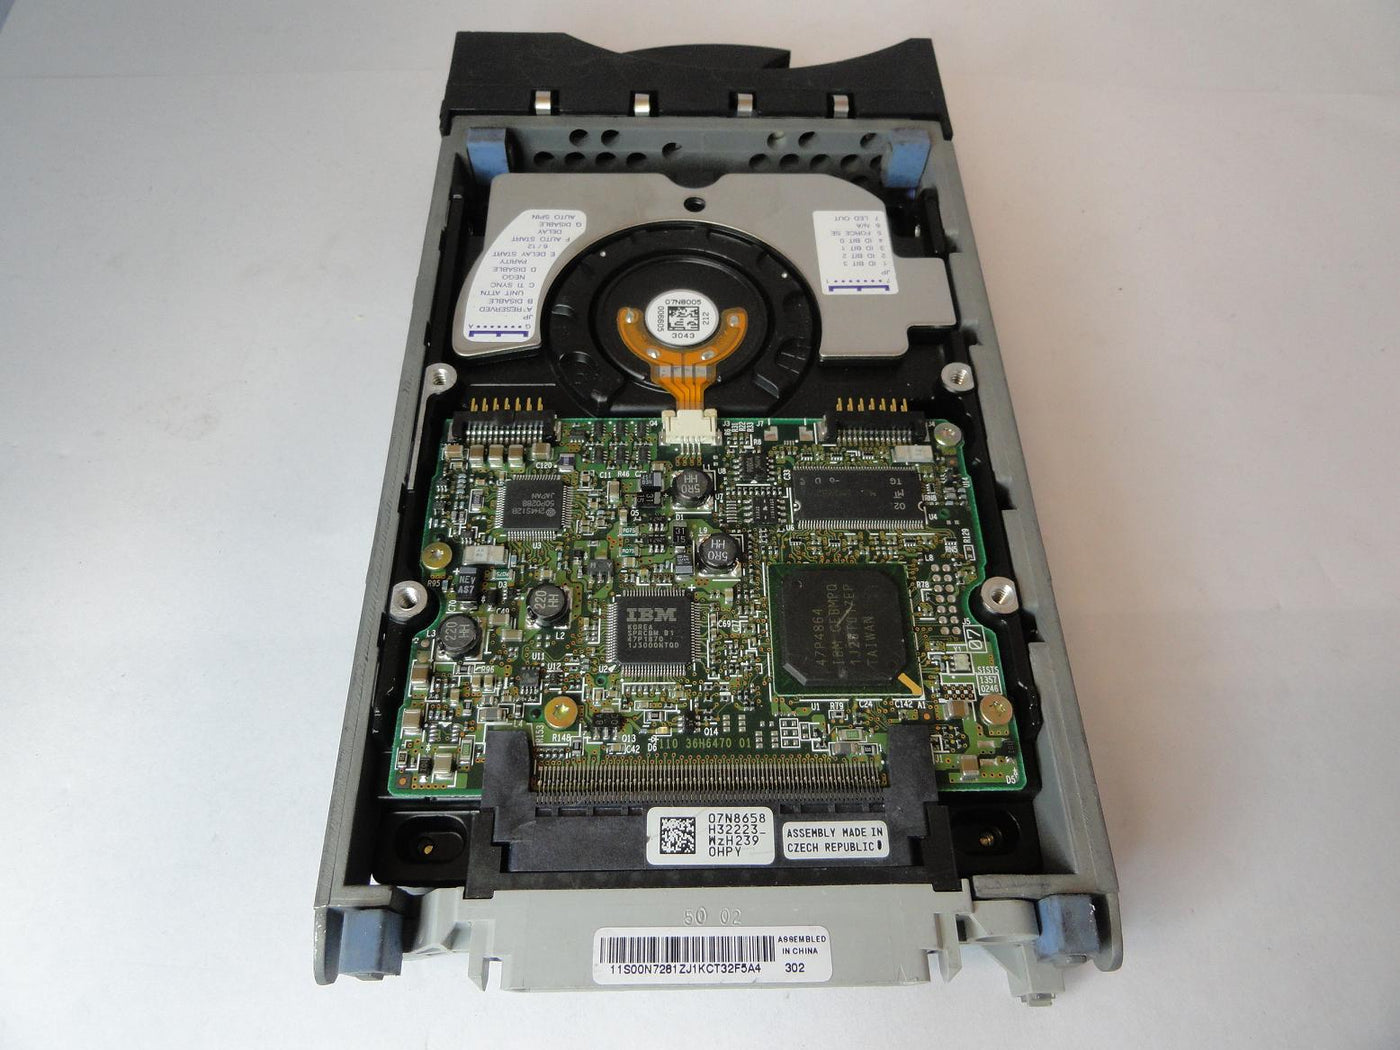 PR23098_08K0373_Hitachi IBM 73.4GB SCSI 80 Pin 10Krpm 3.5in HDD - Image2